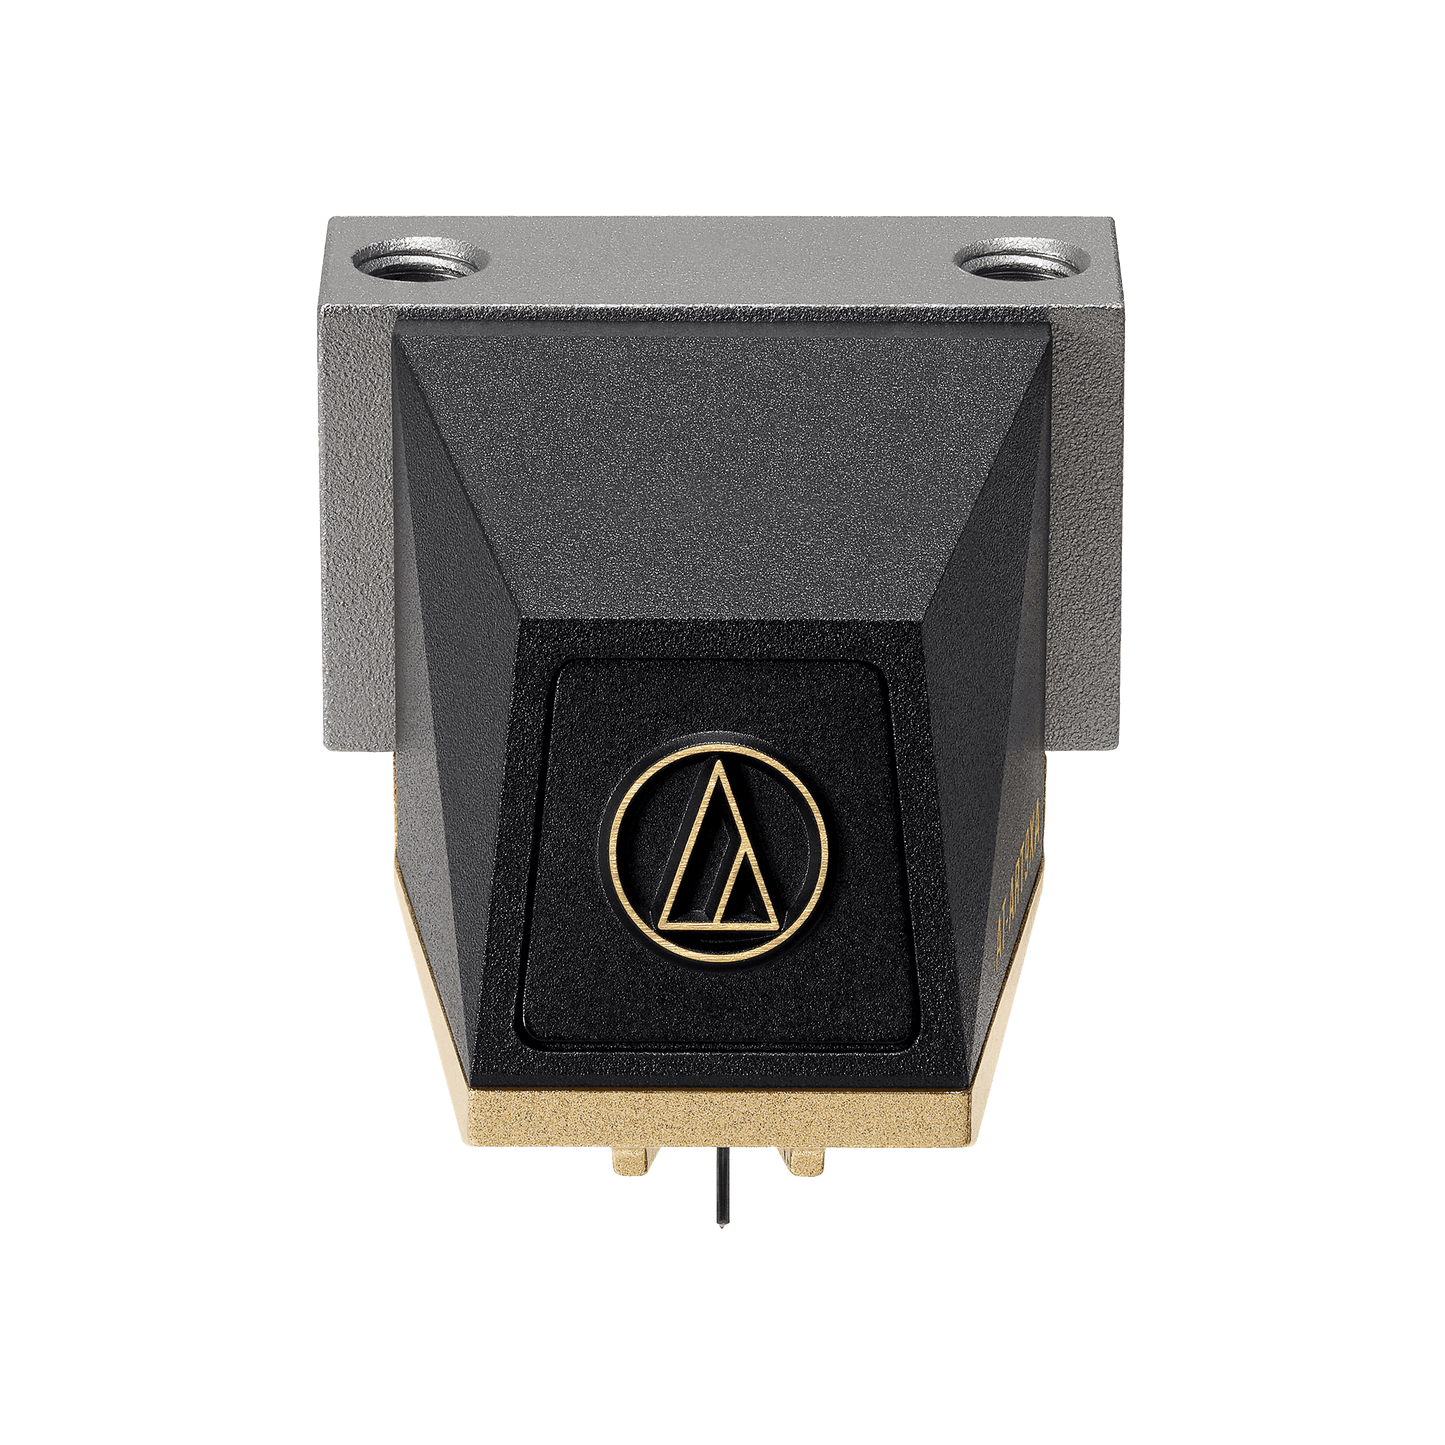 Audio-Technica AT-ART9XA Non-Magnetic Coil Cartridge